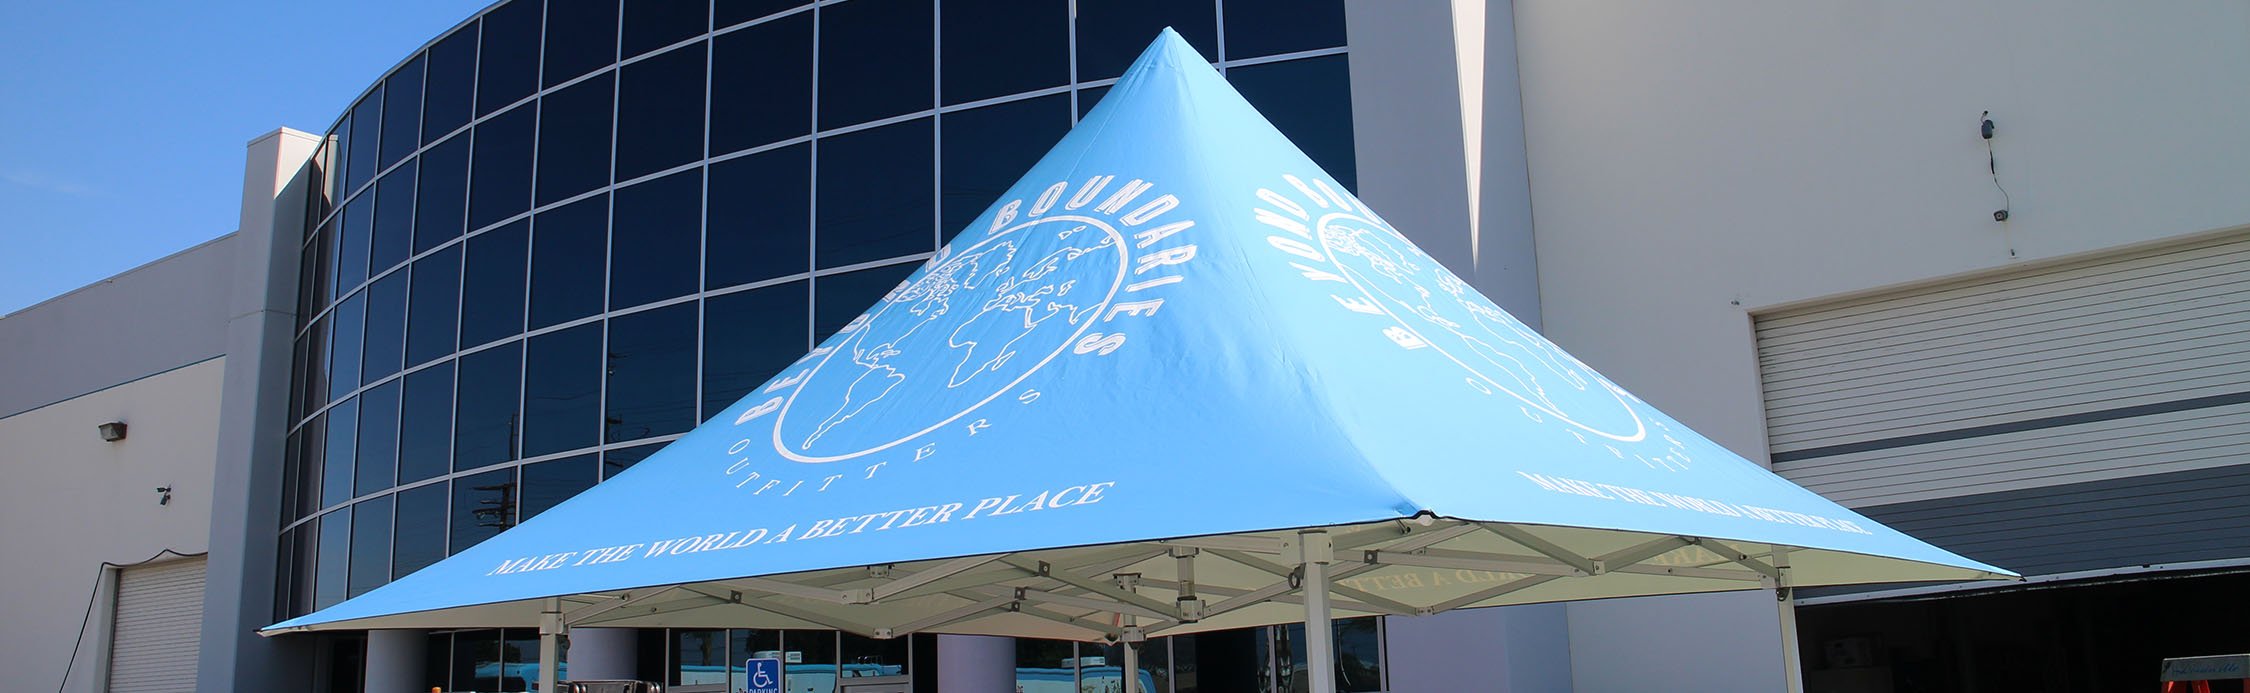 Parasol-tent-blue-top-on-display.jpg